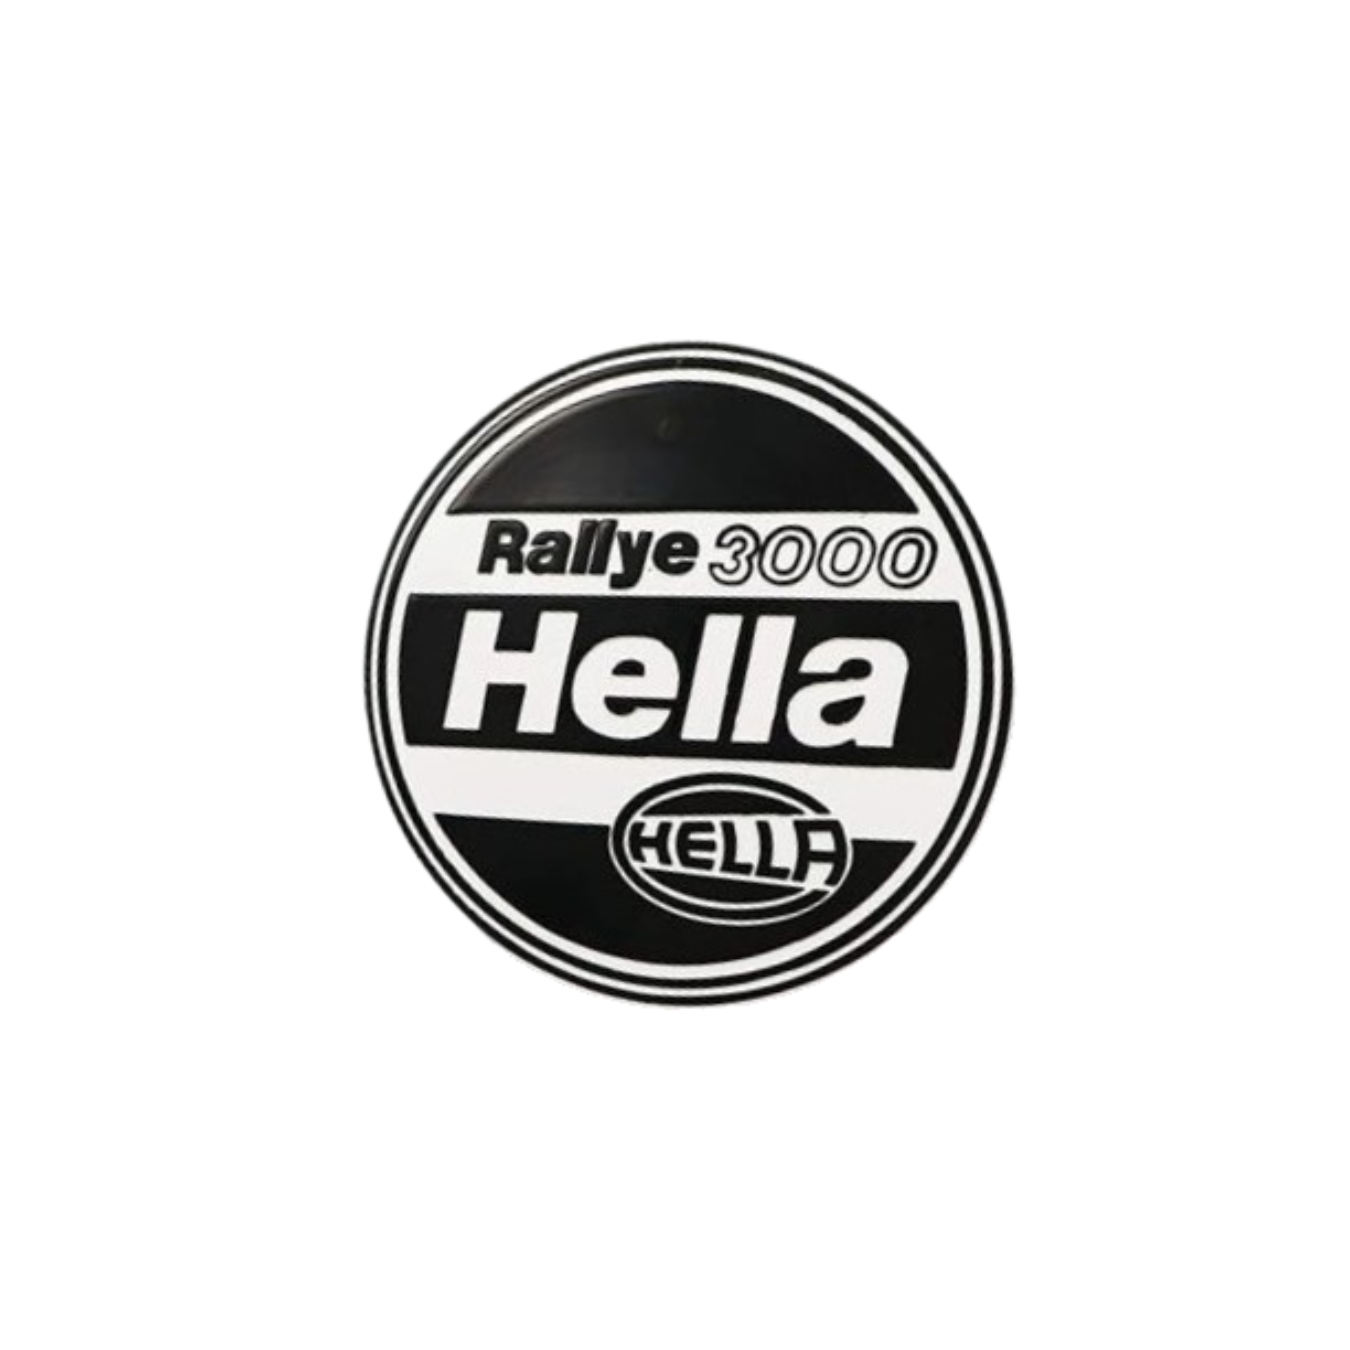 Phare longue portée HELLA Rallye 3000 Ø 210 mm- En vente sur ORECA STORE